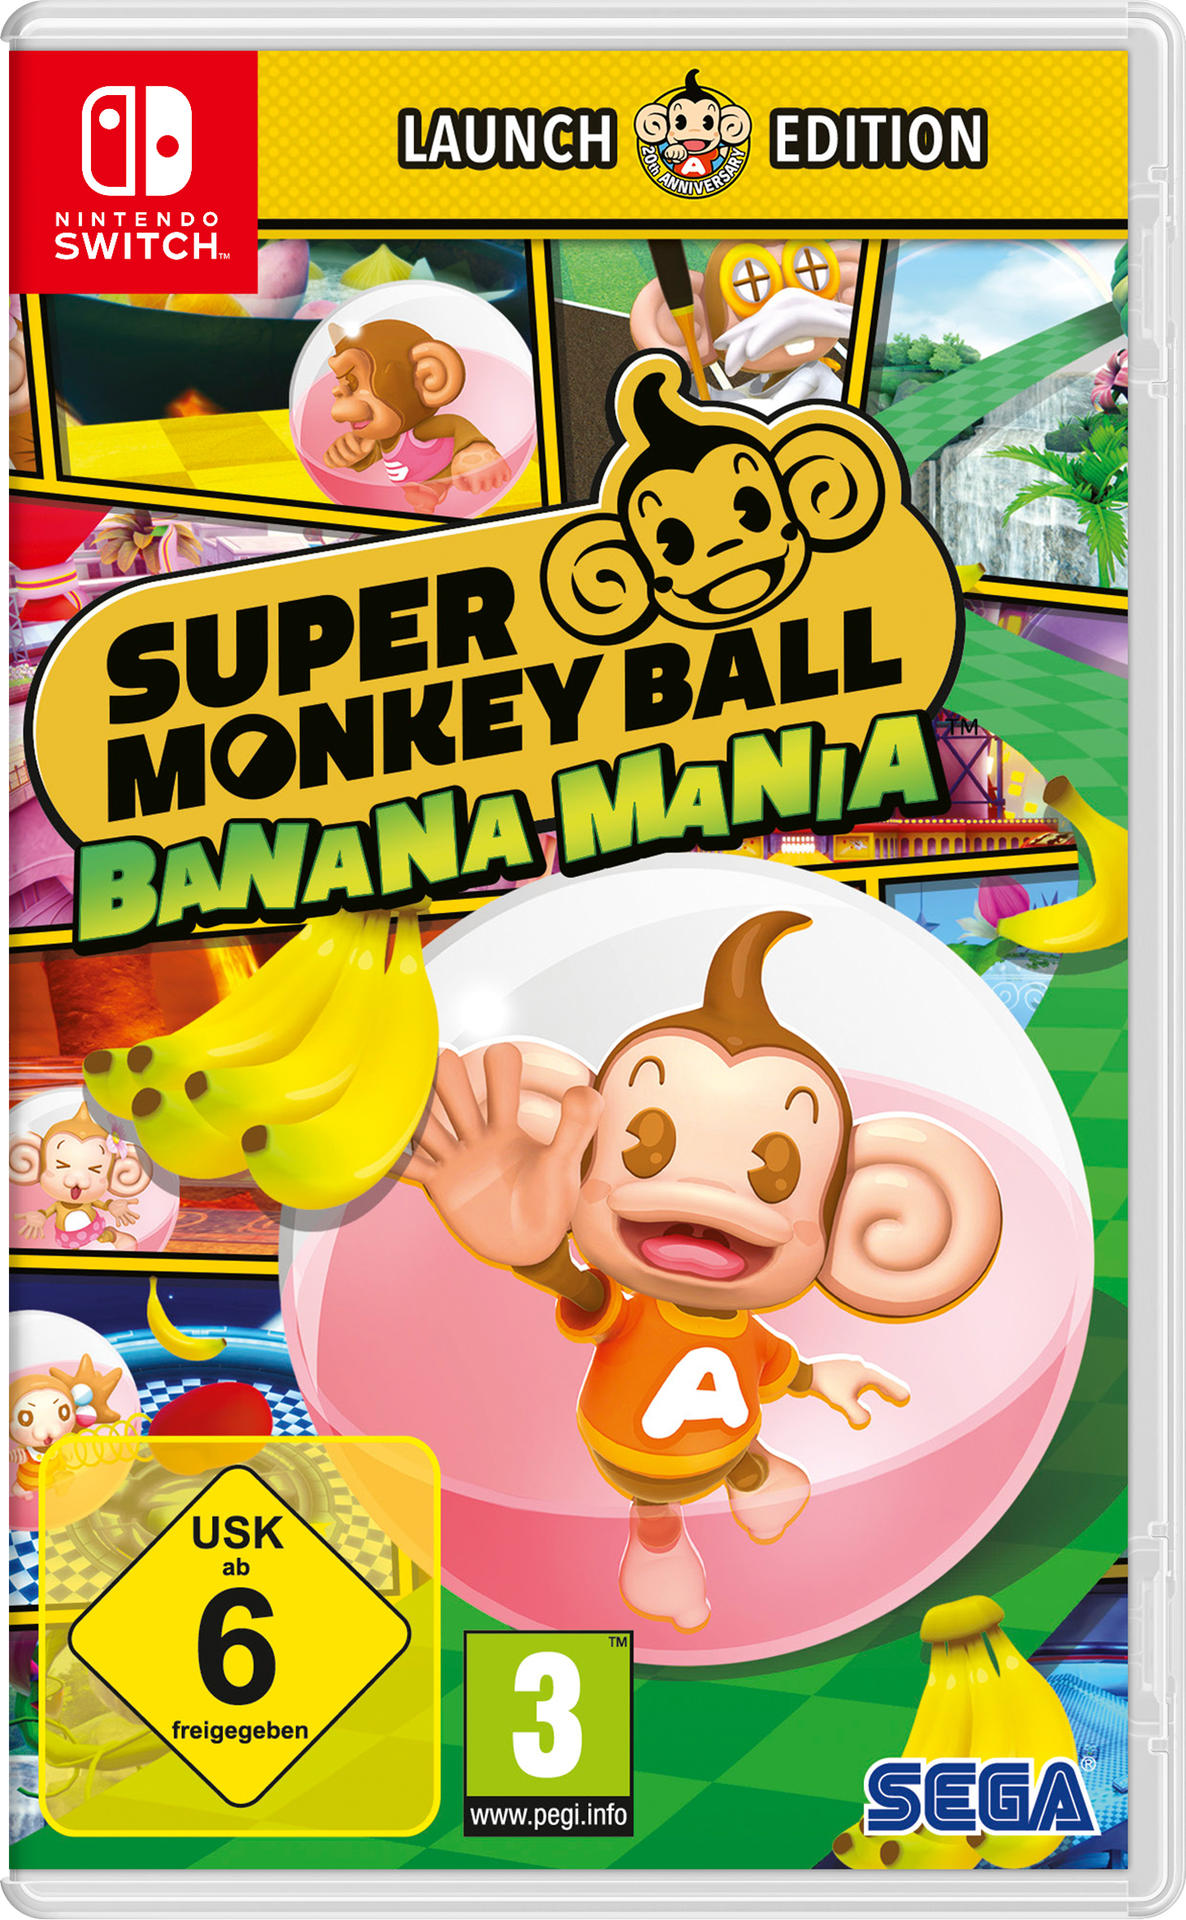 Switch] EDITION BANANA [Nintendo MANIA SW LAUNCH - SUPER MONKEY BALL